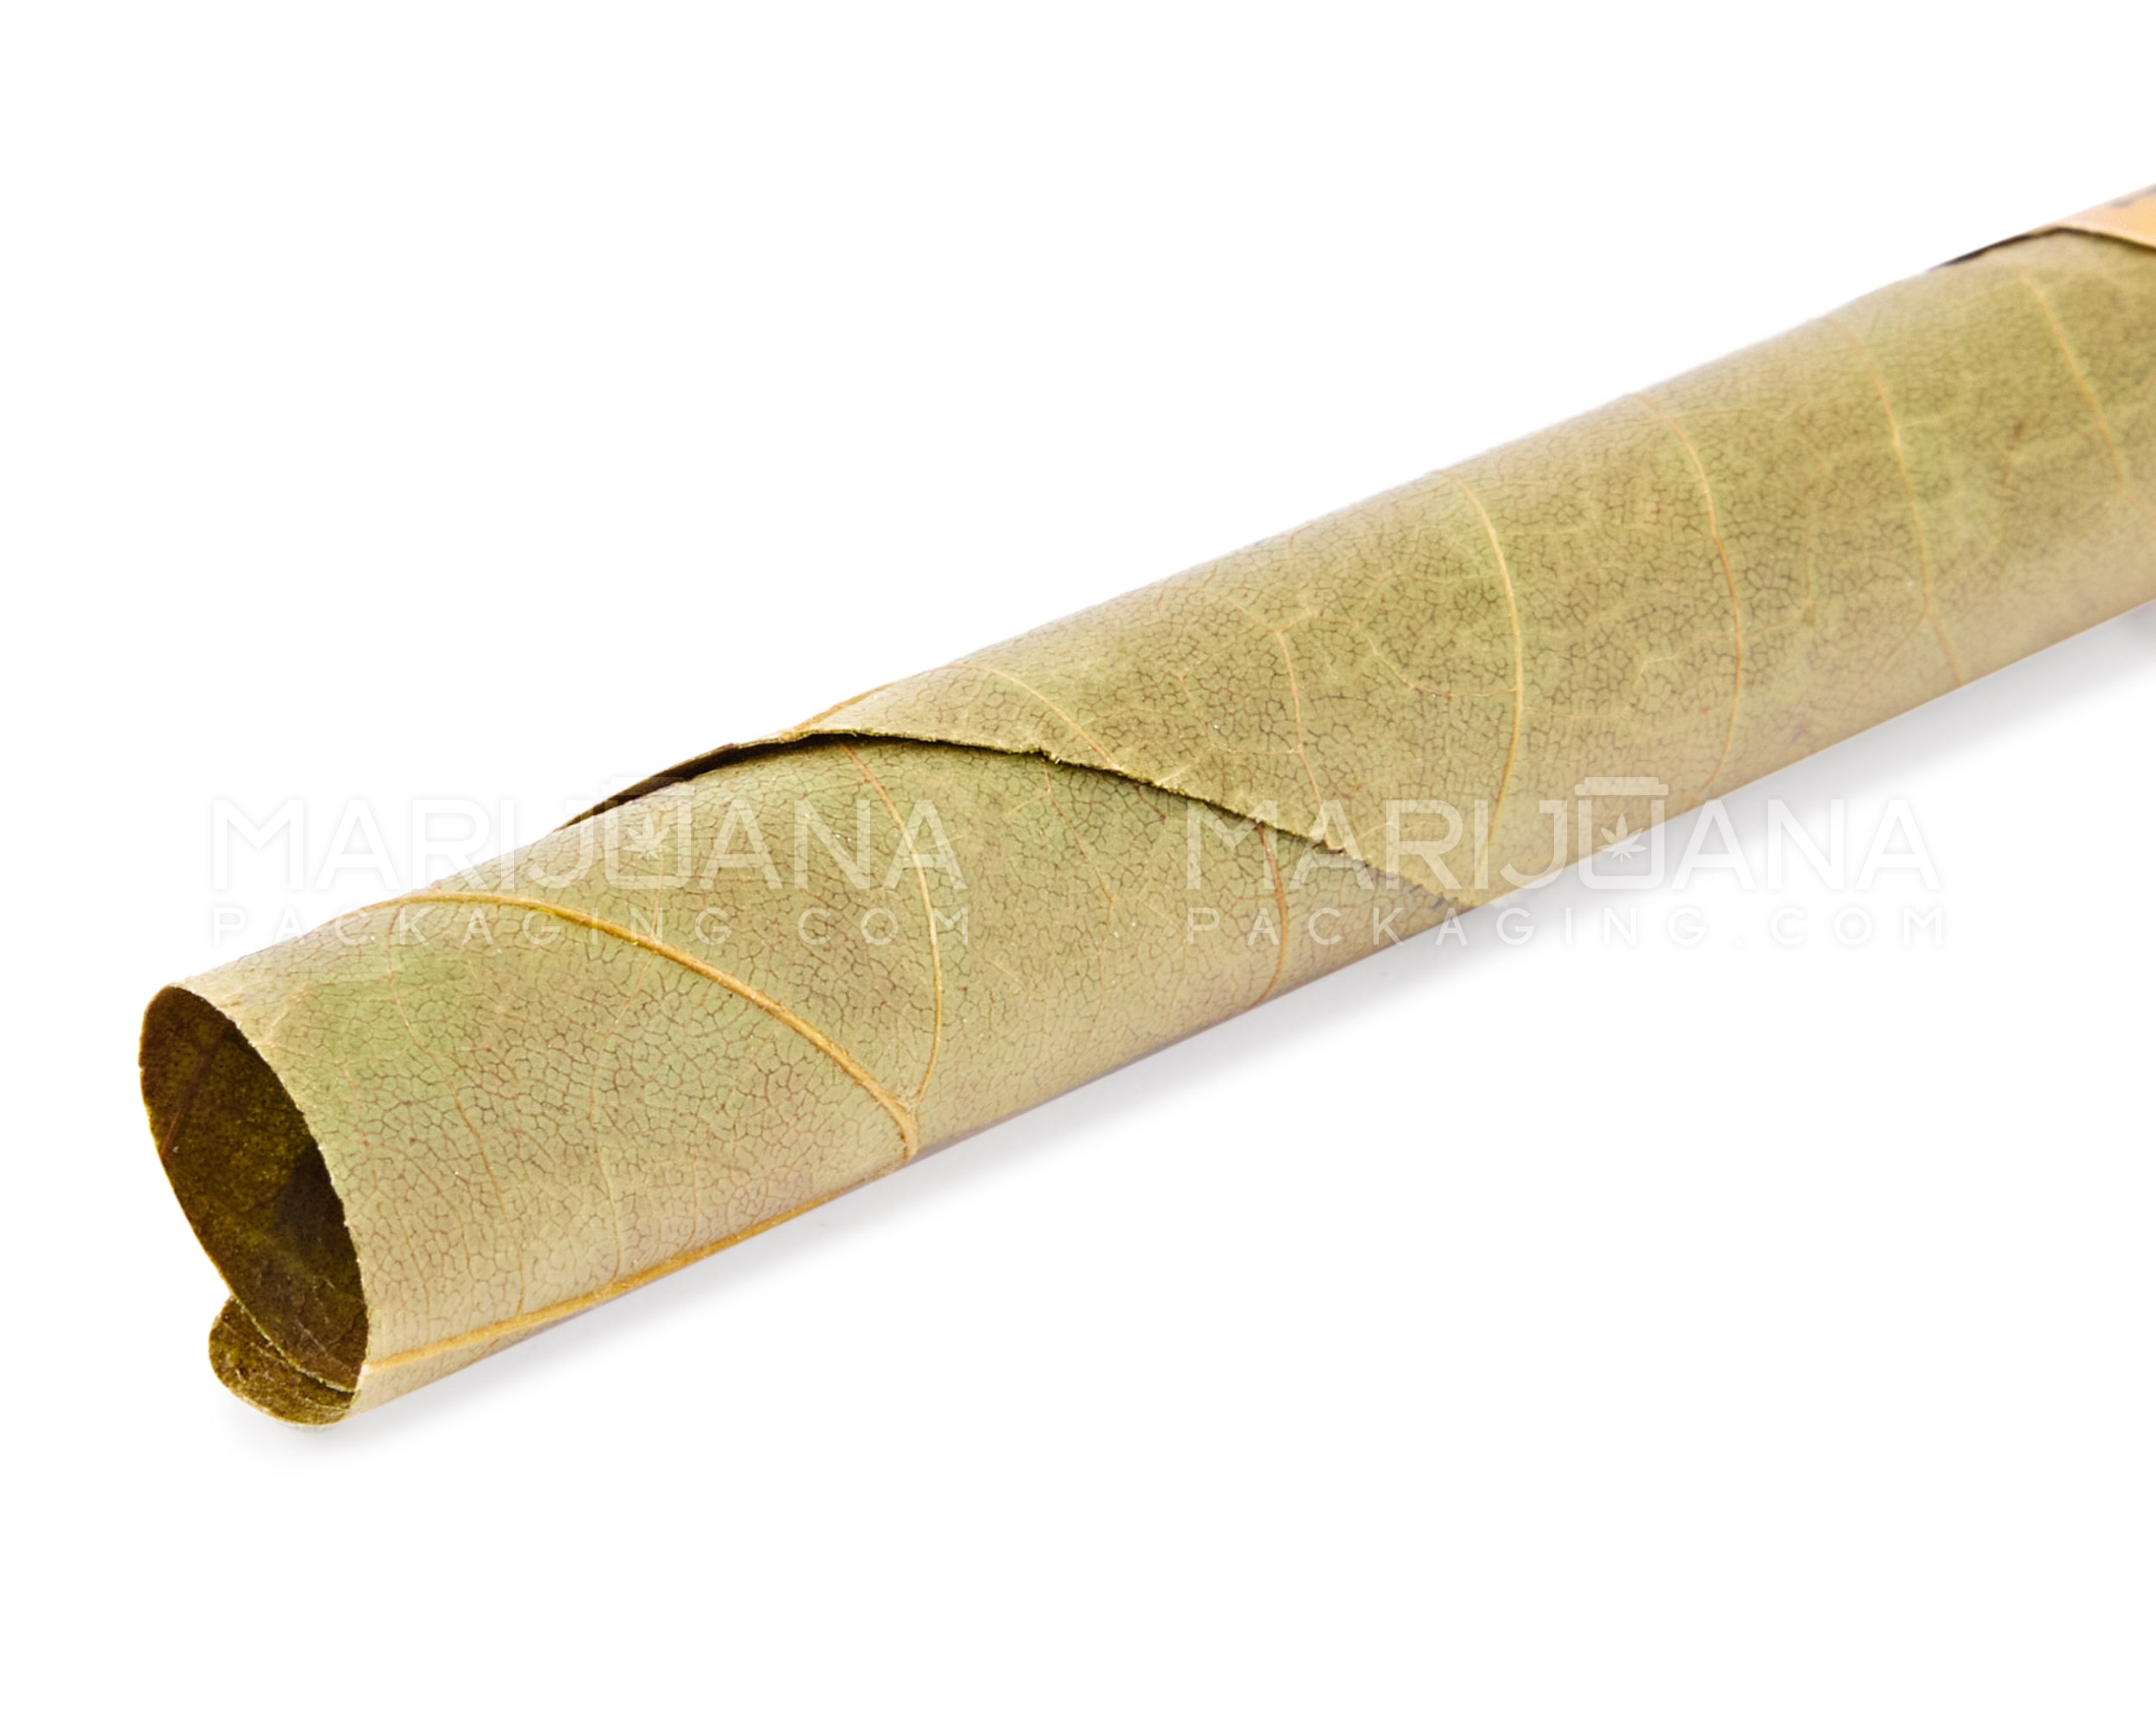 KING PALM | 'Retail Display' Mini Green Natural Leaf Blunt Wraps | 84mm - Lemon Haze - 20 Count - 7